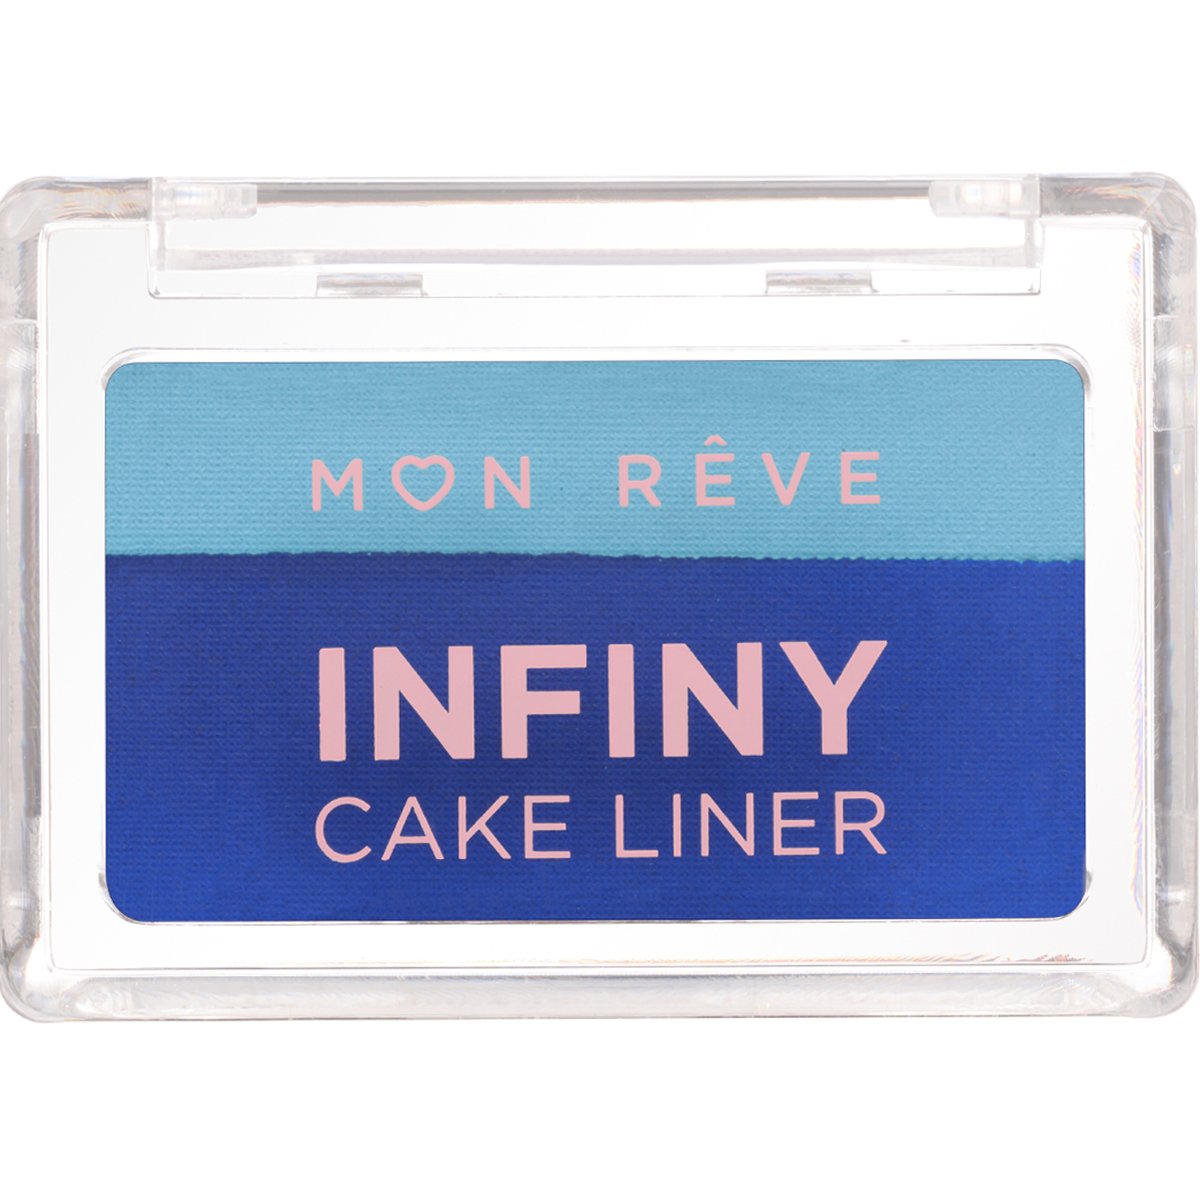 Mon Reve Mon Reve Infiny Cake Liner Water-Activated Eyeliner σε Μορφή Πούδρας με Απίστευτη Χρωματική Απόδοση 3g - 04 Royal & Sky Blue